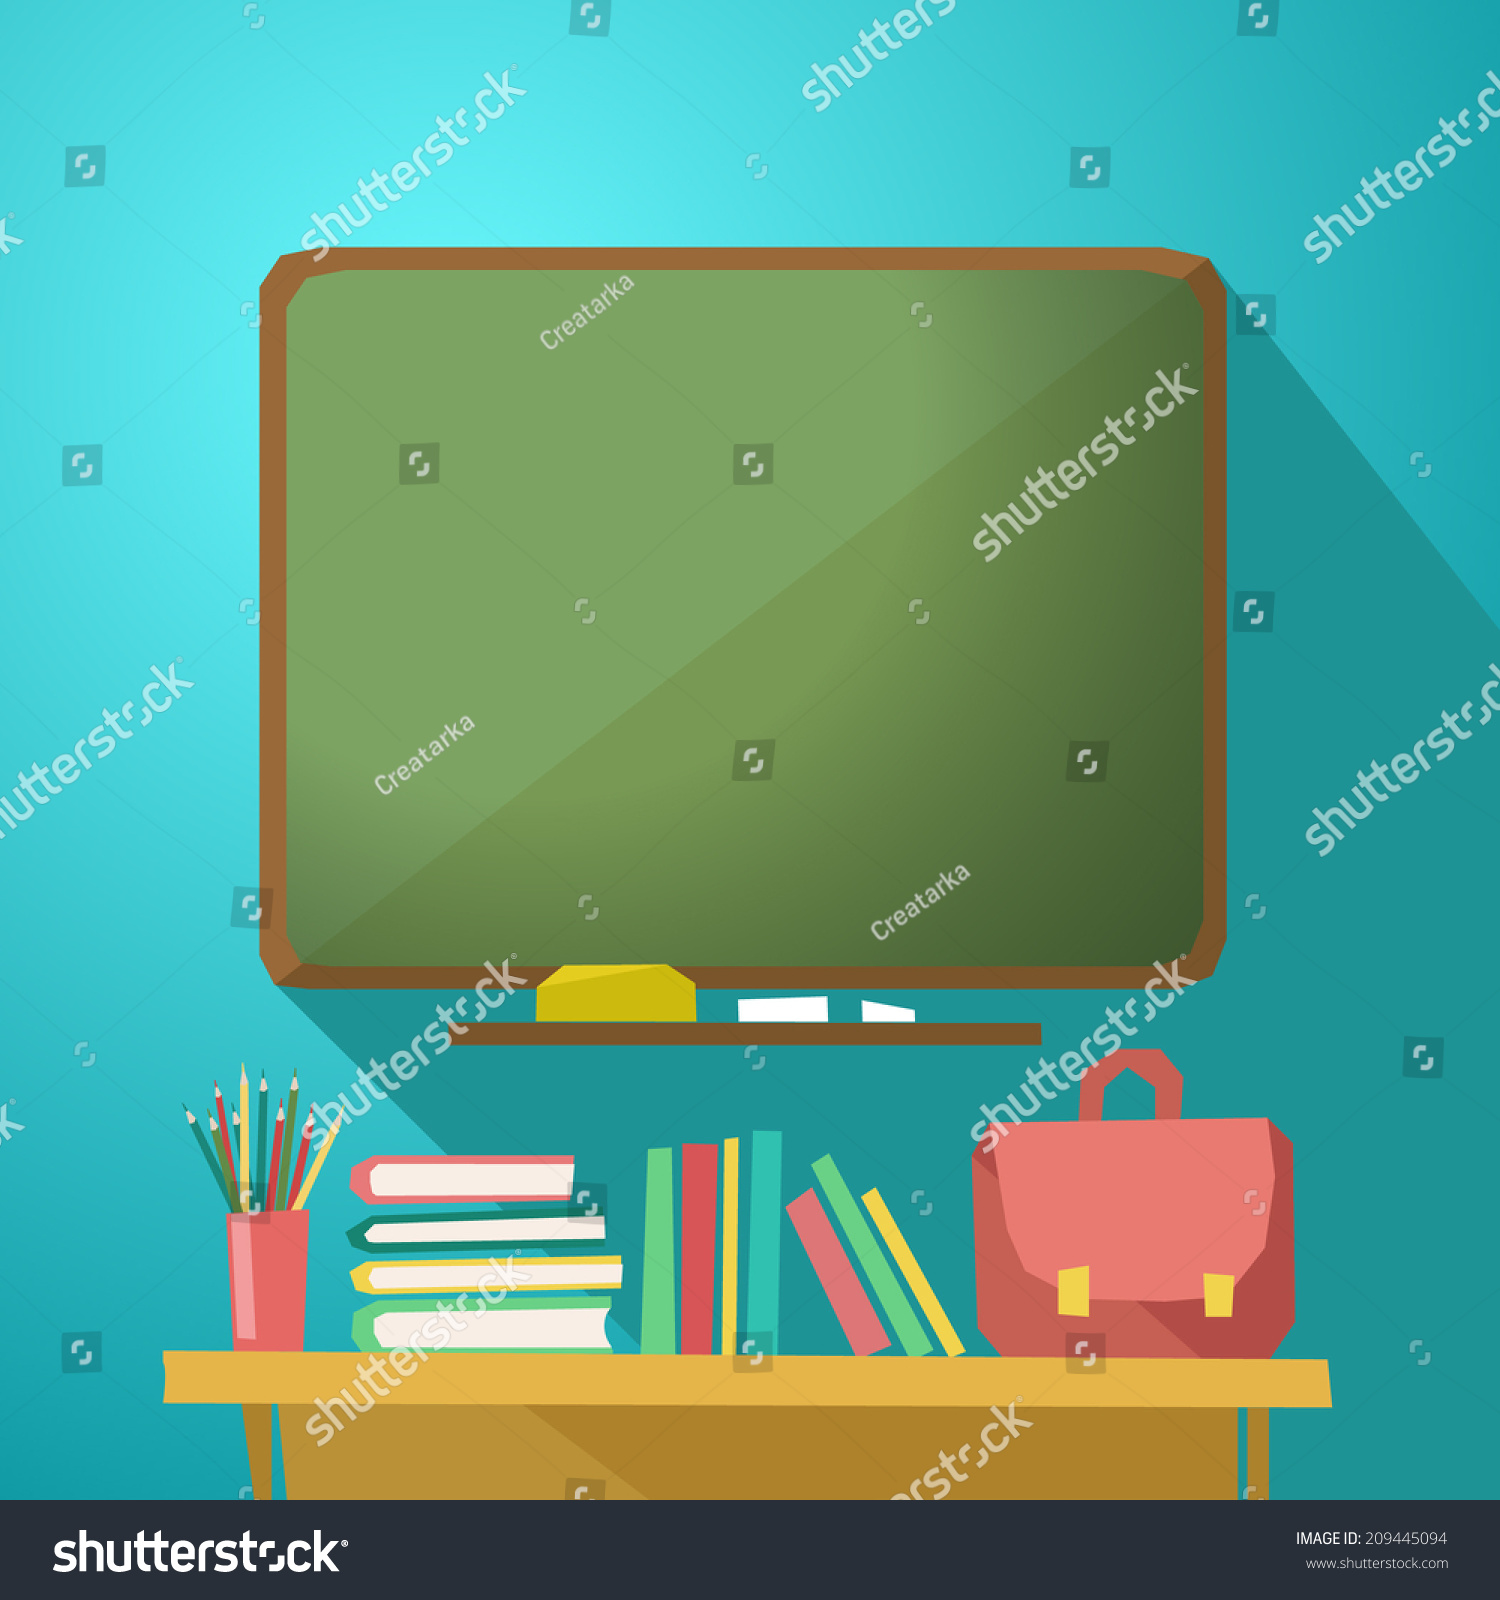 School green desk with school supplies, vector illustration in flat design   #209445094